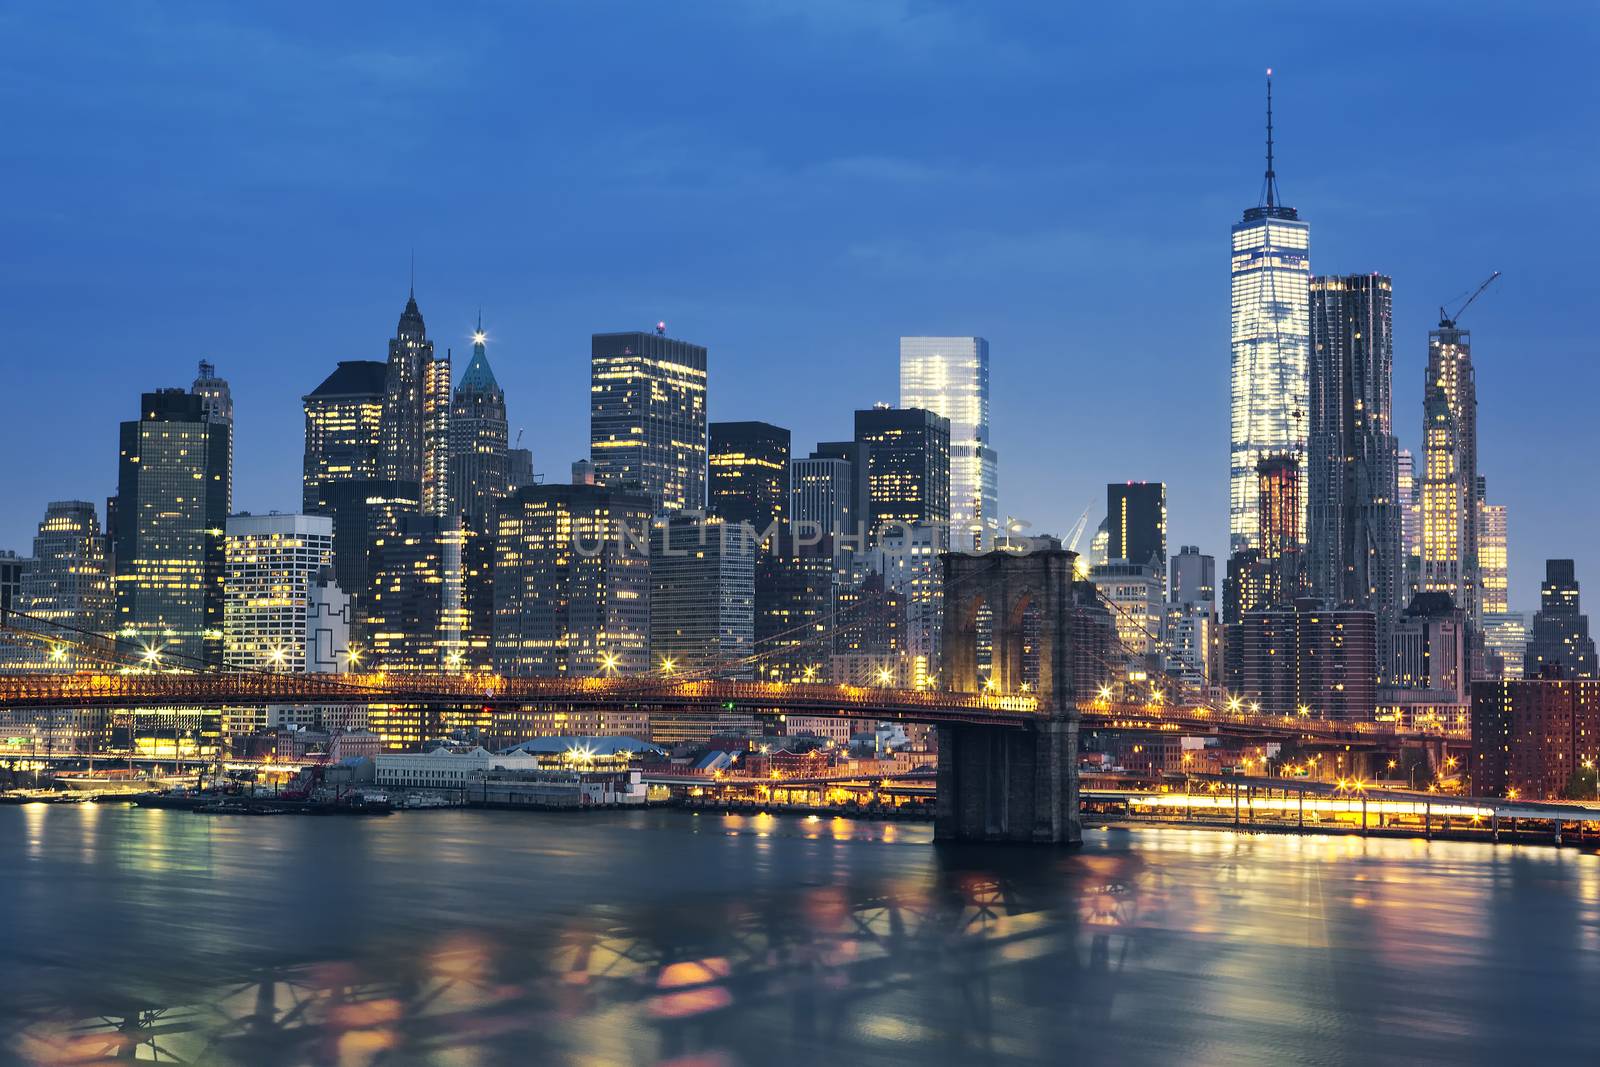 New York City Manhattan midtown at dusk with Brooklyn Bridge. USA.